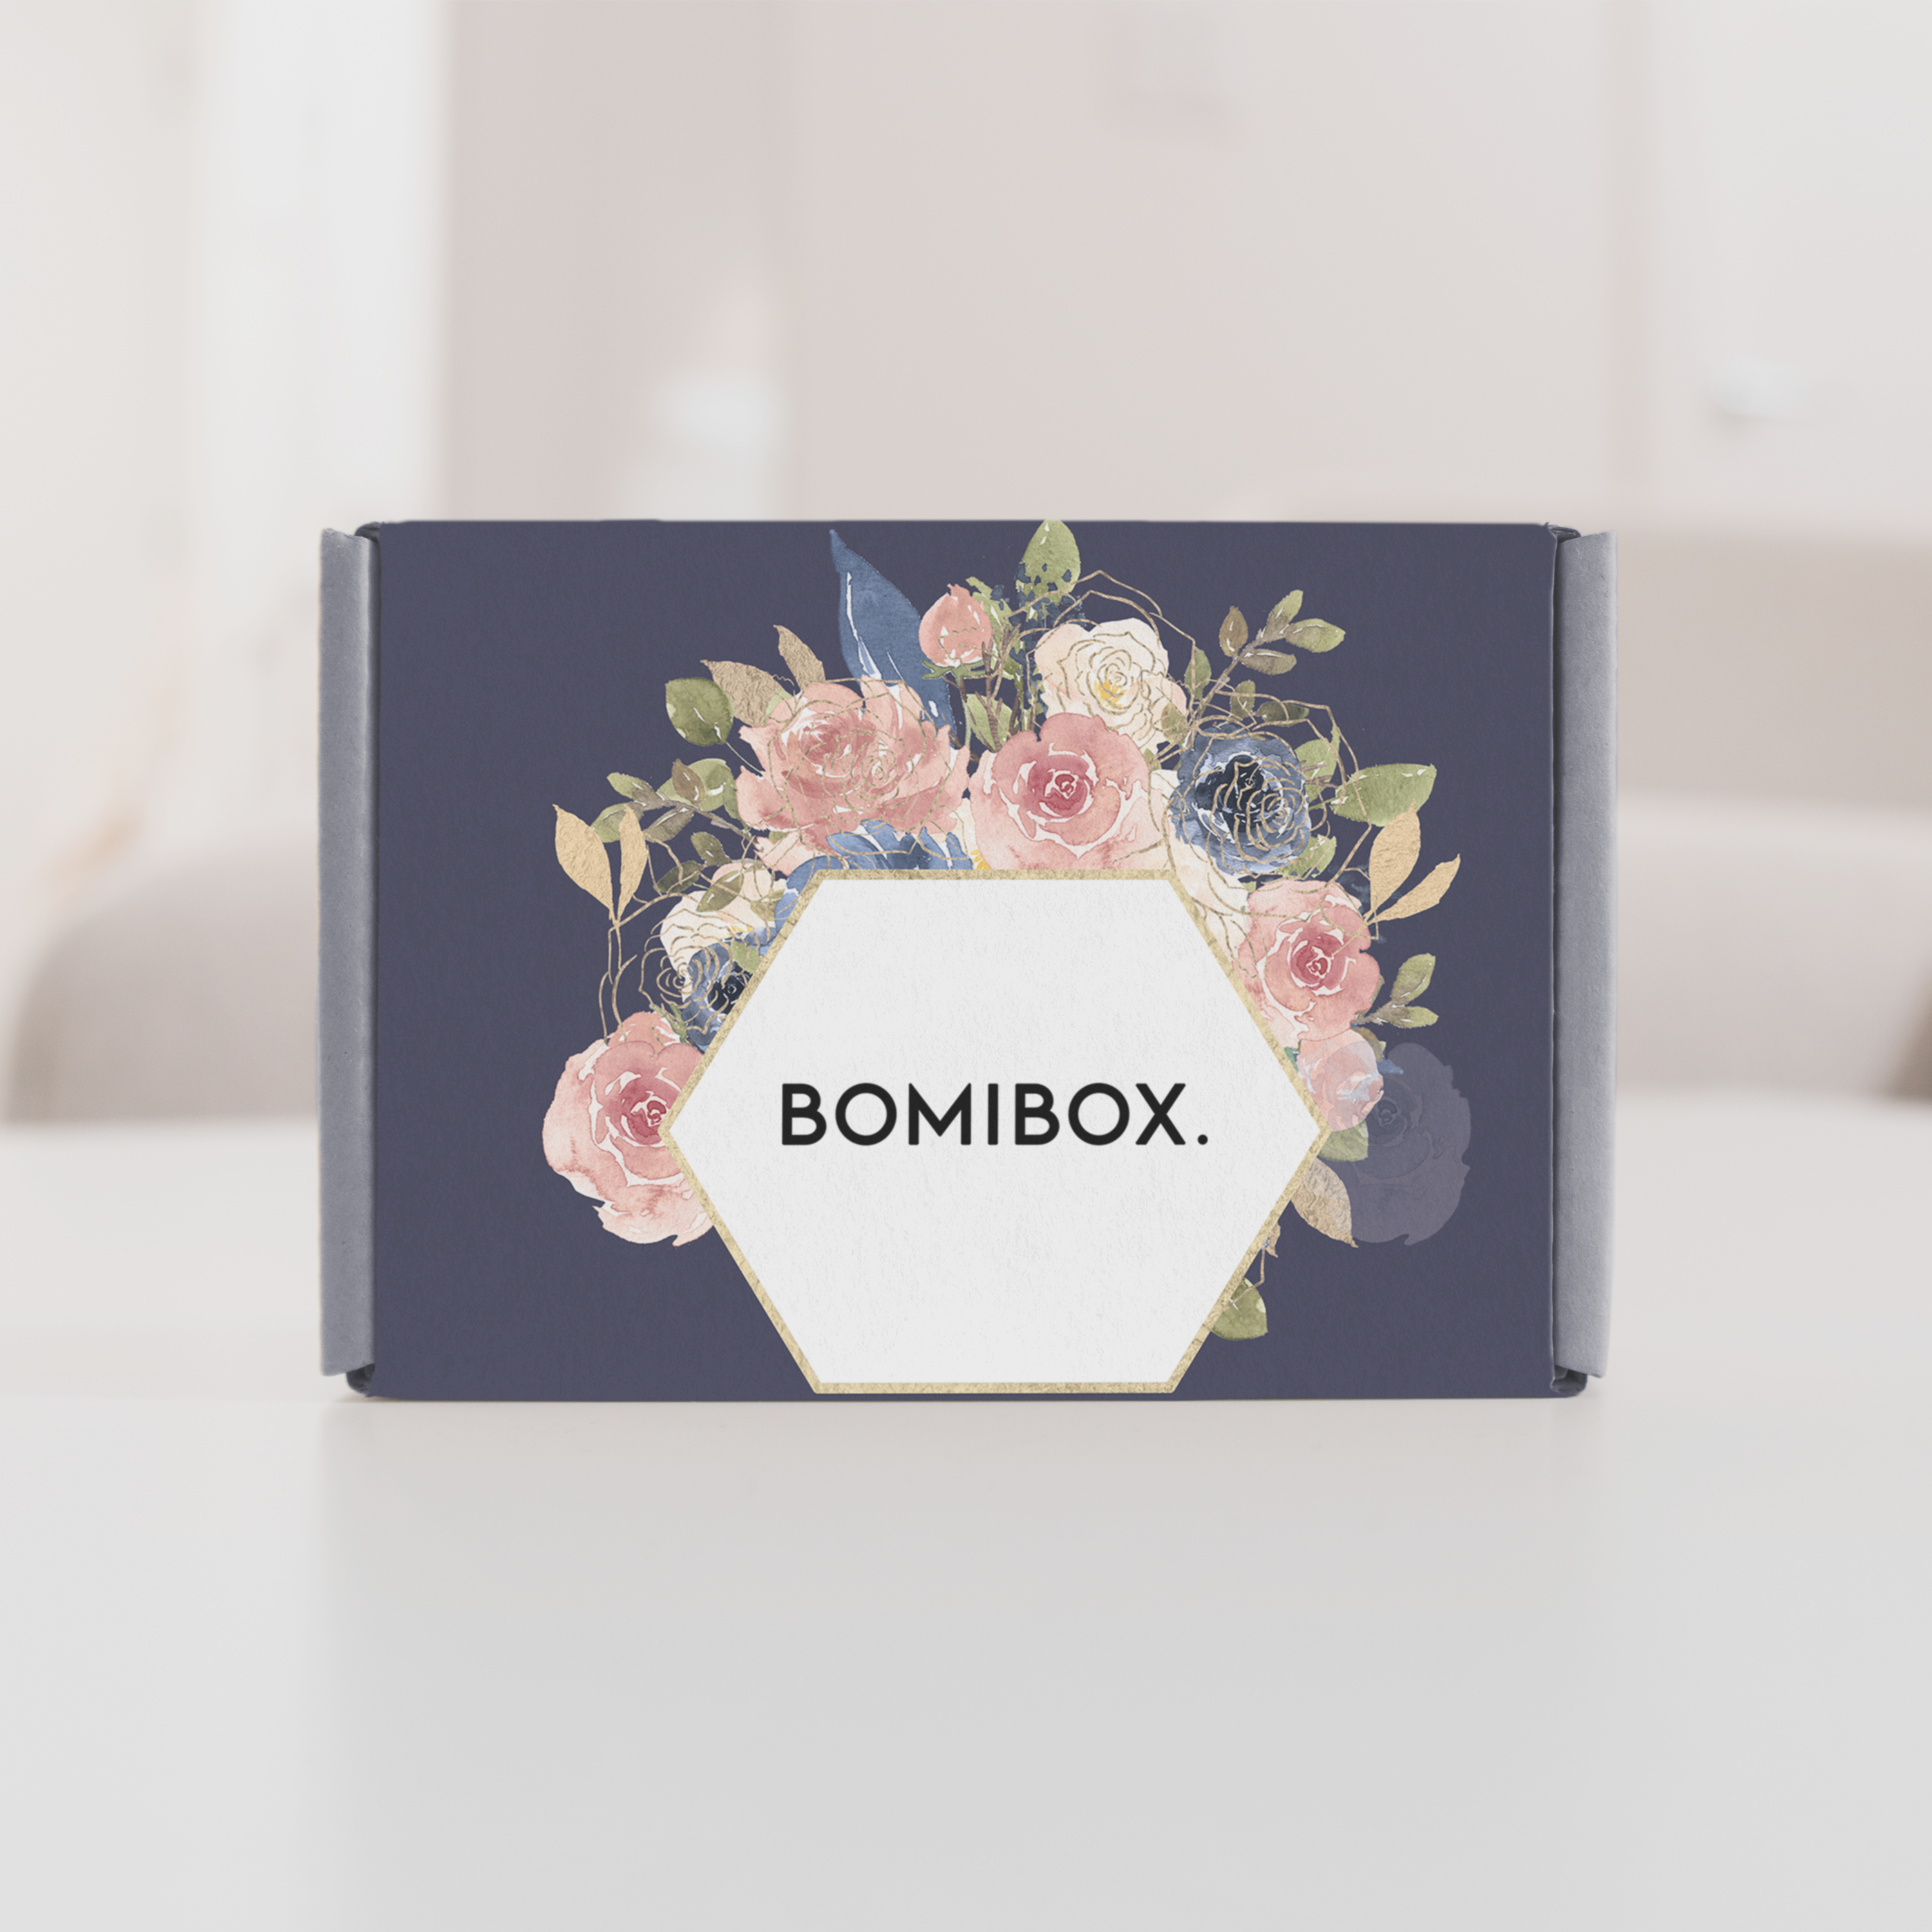 Past Boxes-Bomibox December 2019 - Korean Beauty Box Monthly Korean Skincare Subscription